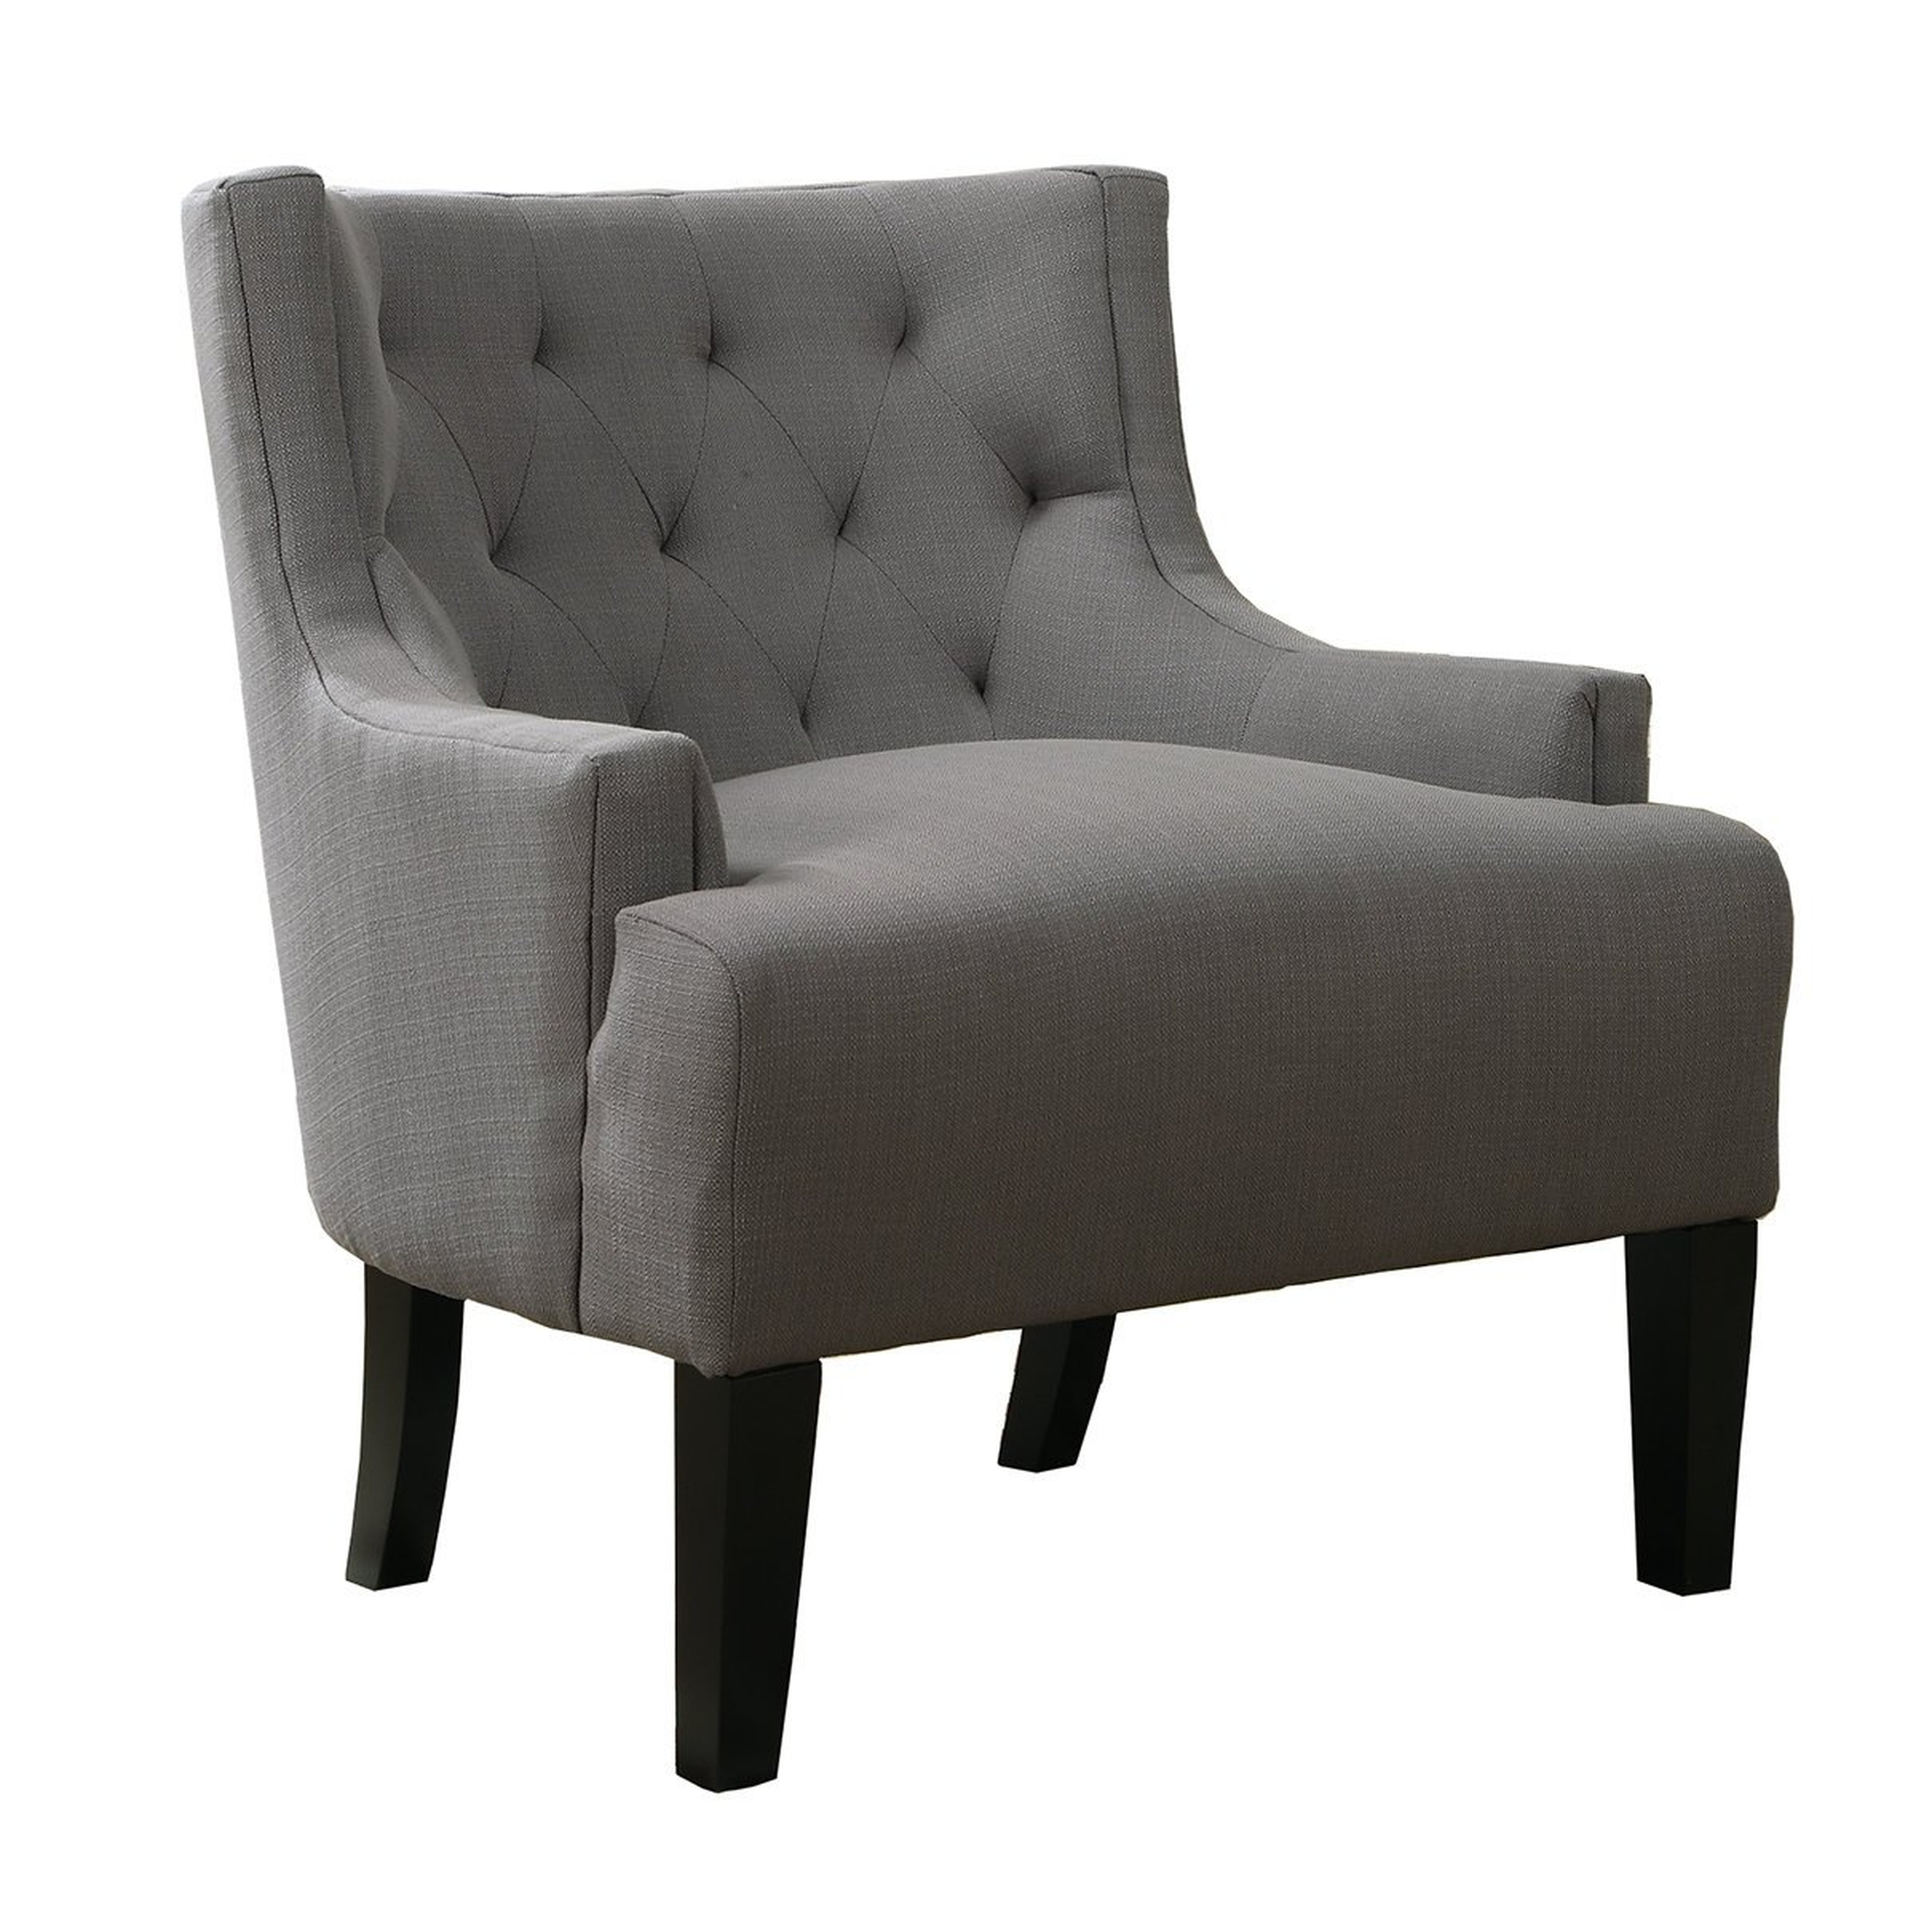 Poundex Bobkona Ansley Microfiber Arm Chair - Grey - Wayfair